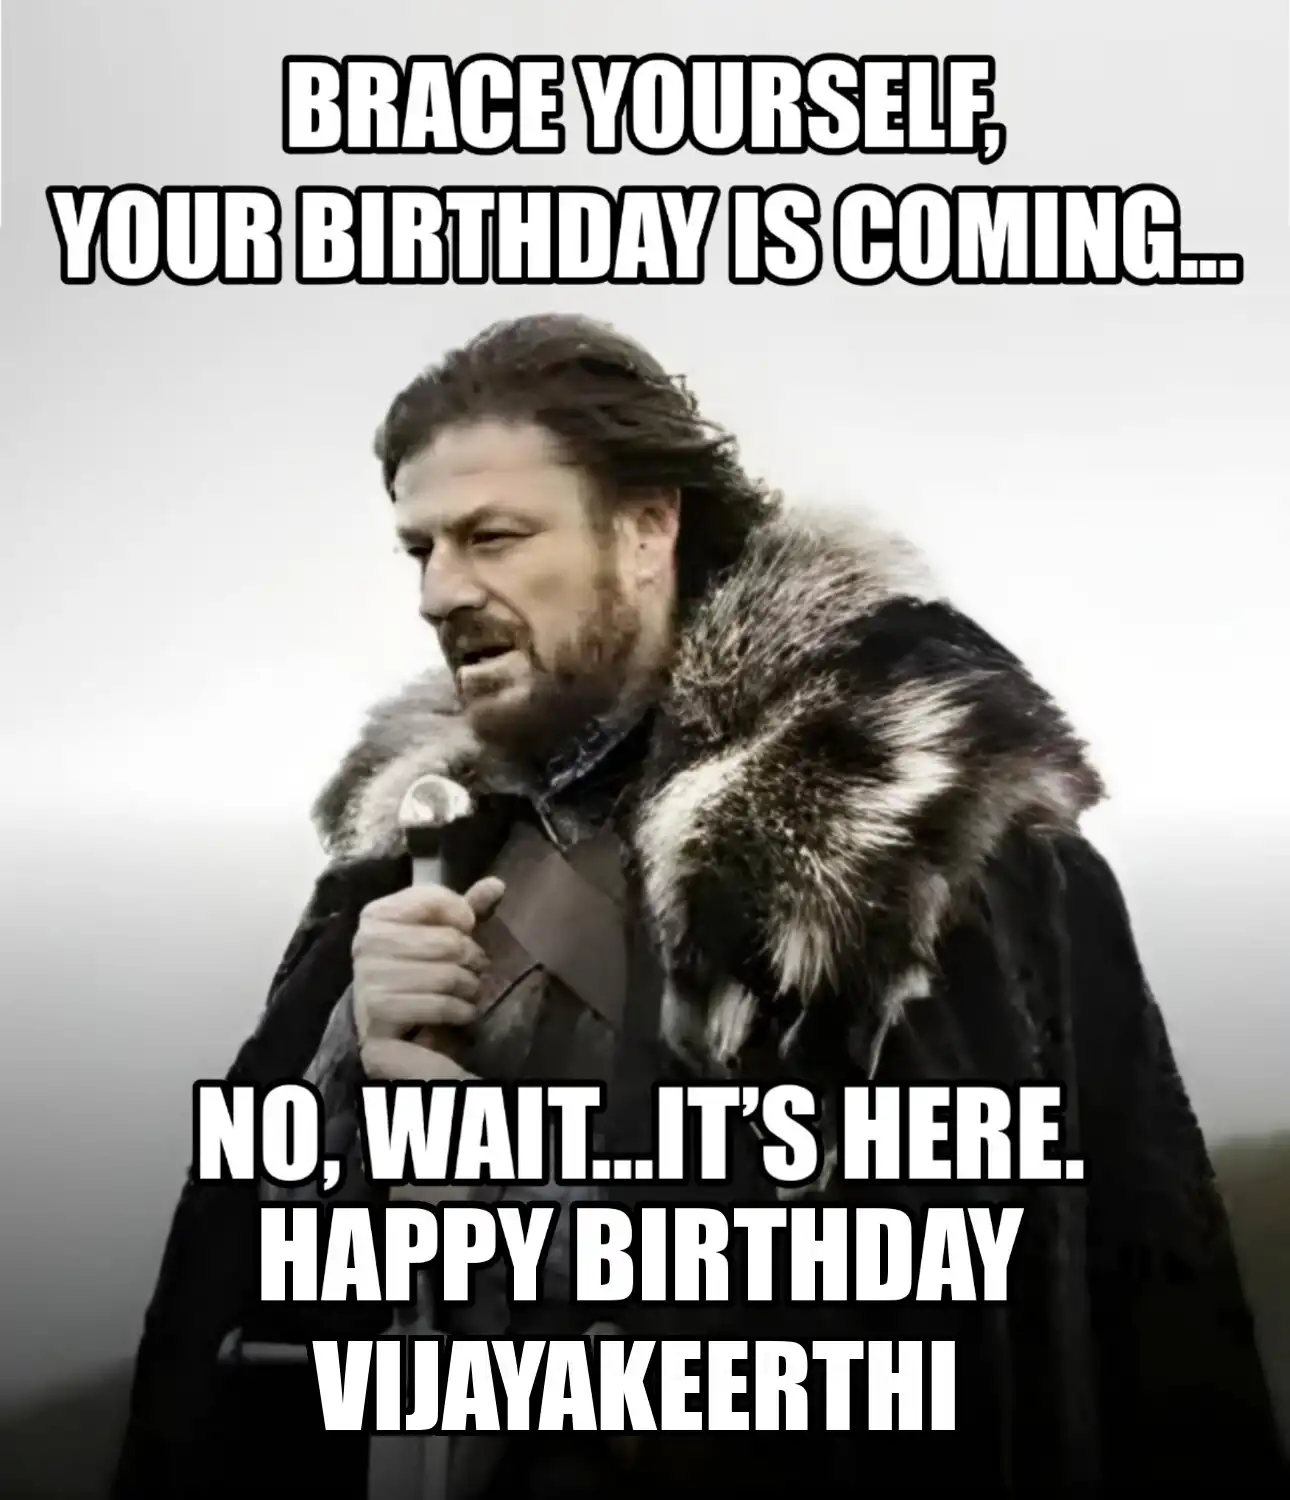 Happy Birthday Vijayakeerthi Brace Yourself Your Birthday Is Coming Meme